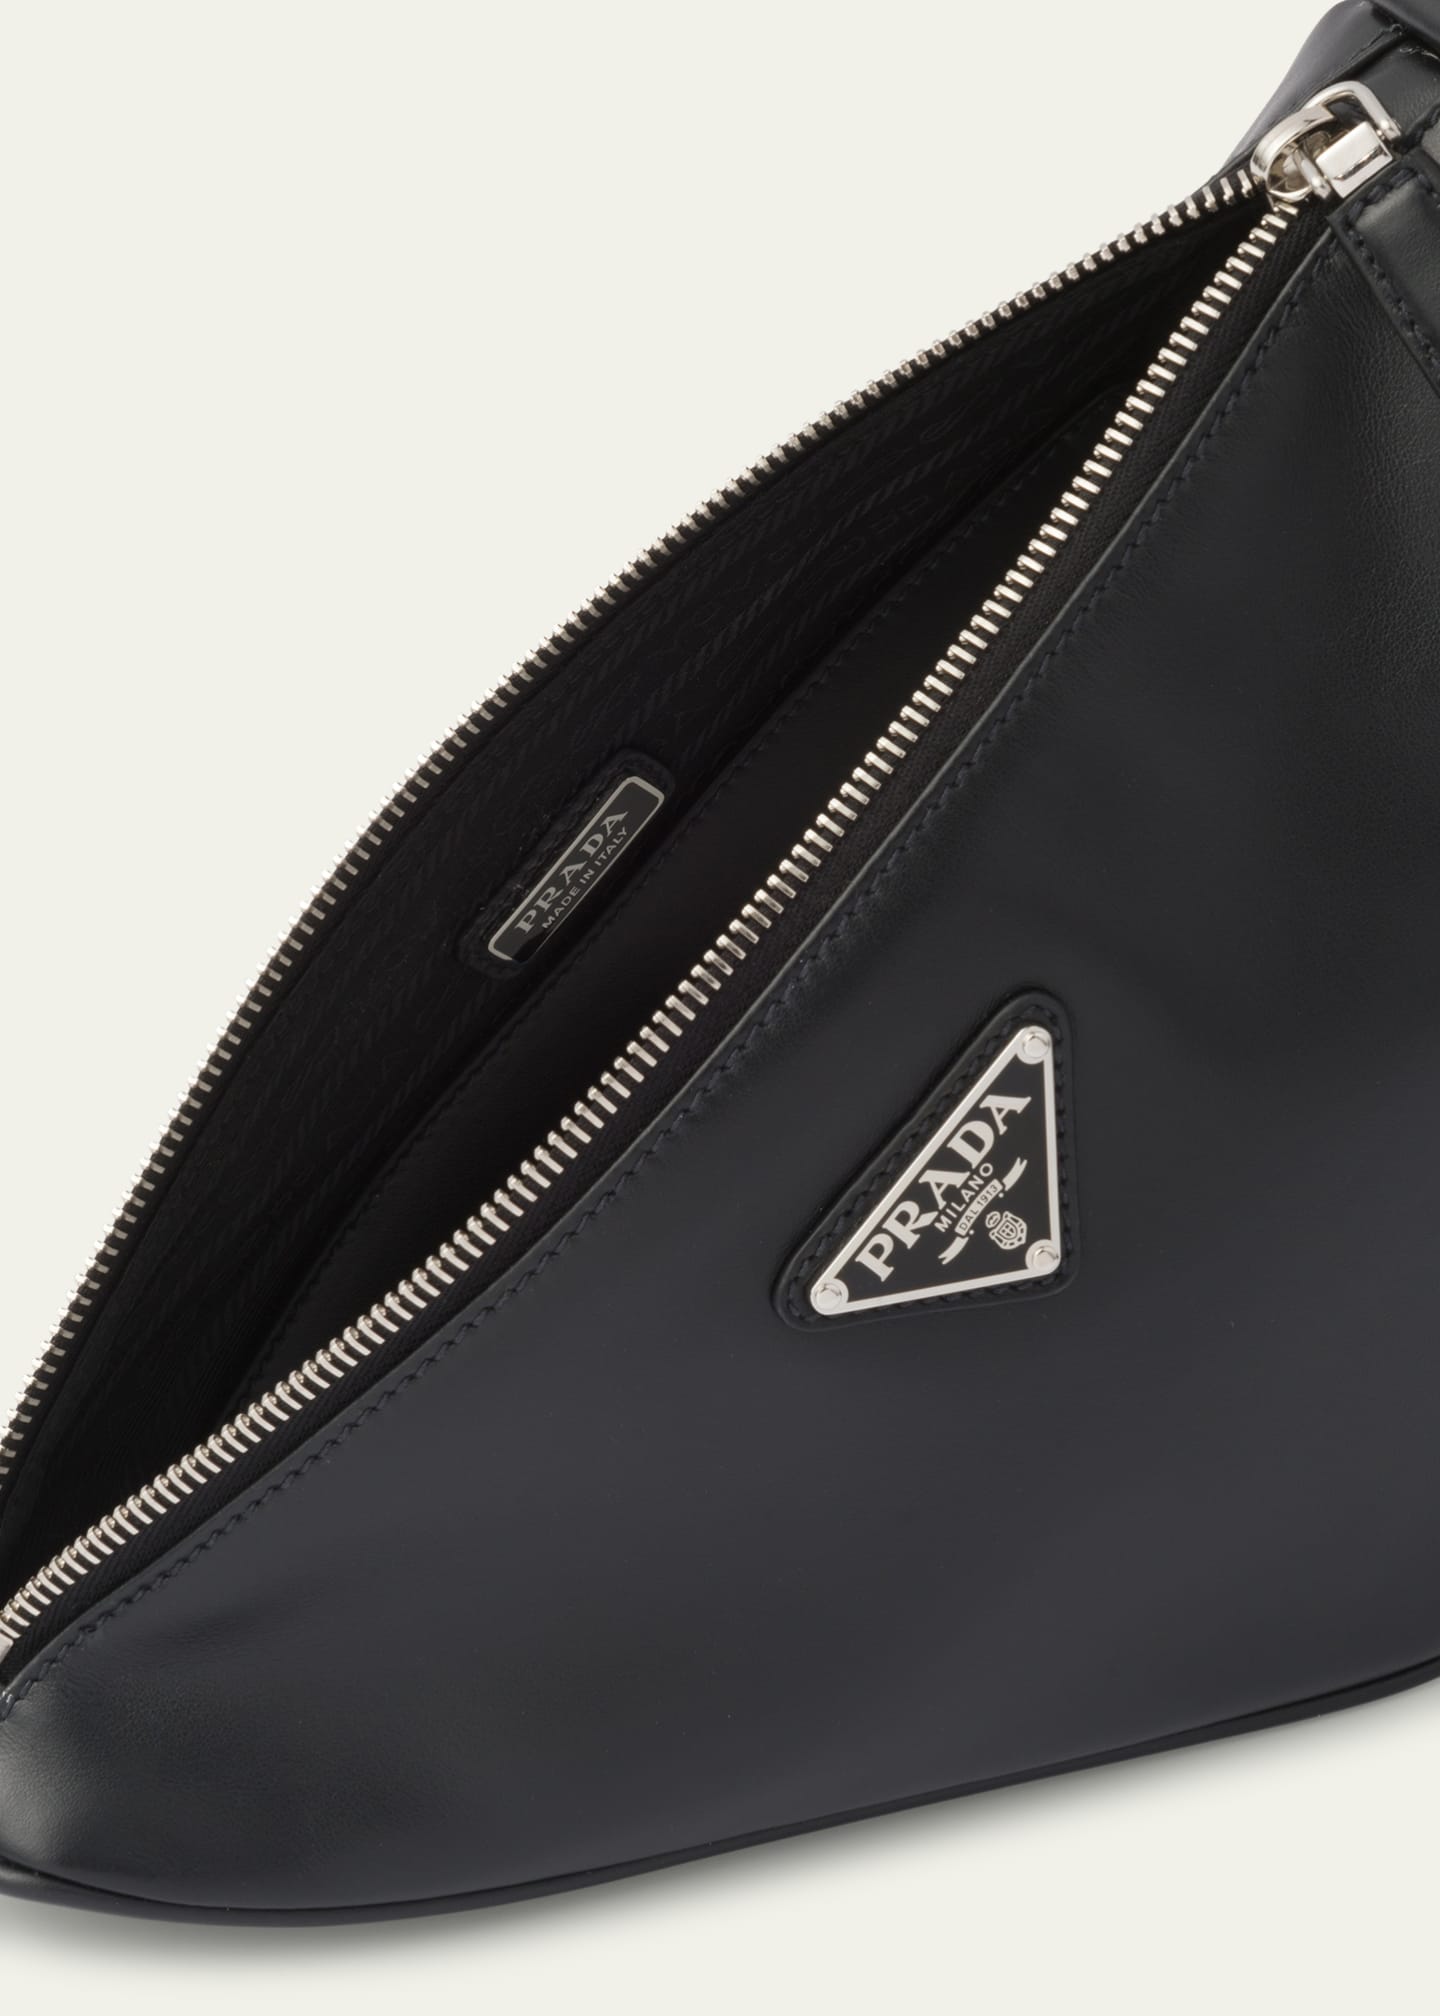 Prada Triangle Leather Bag, Men, Black